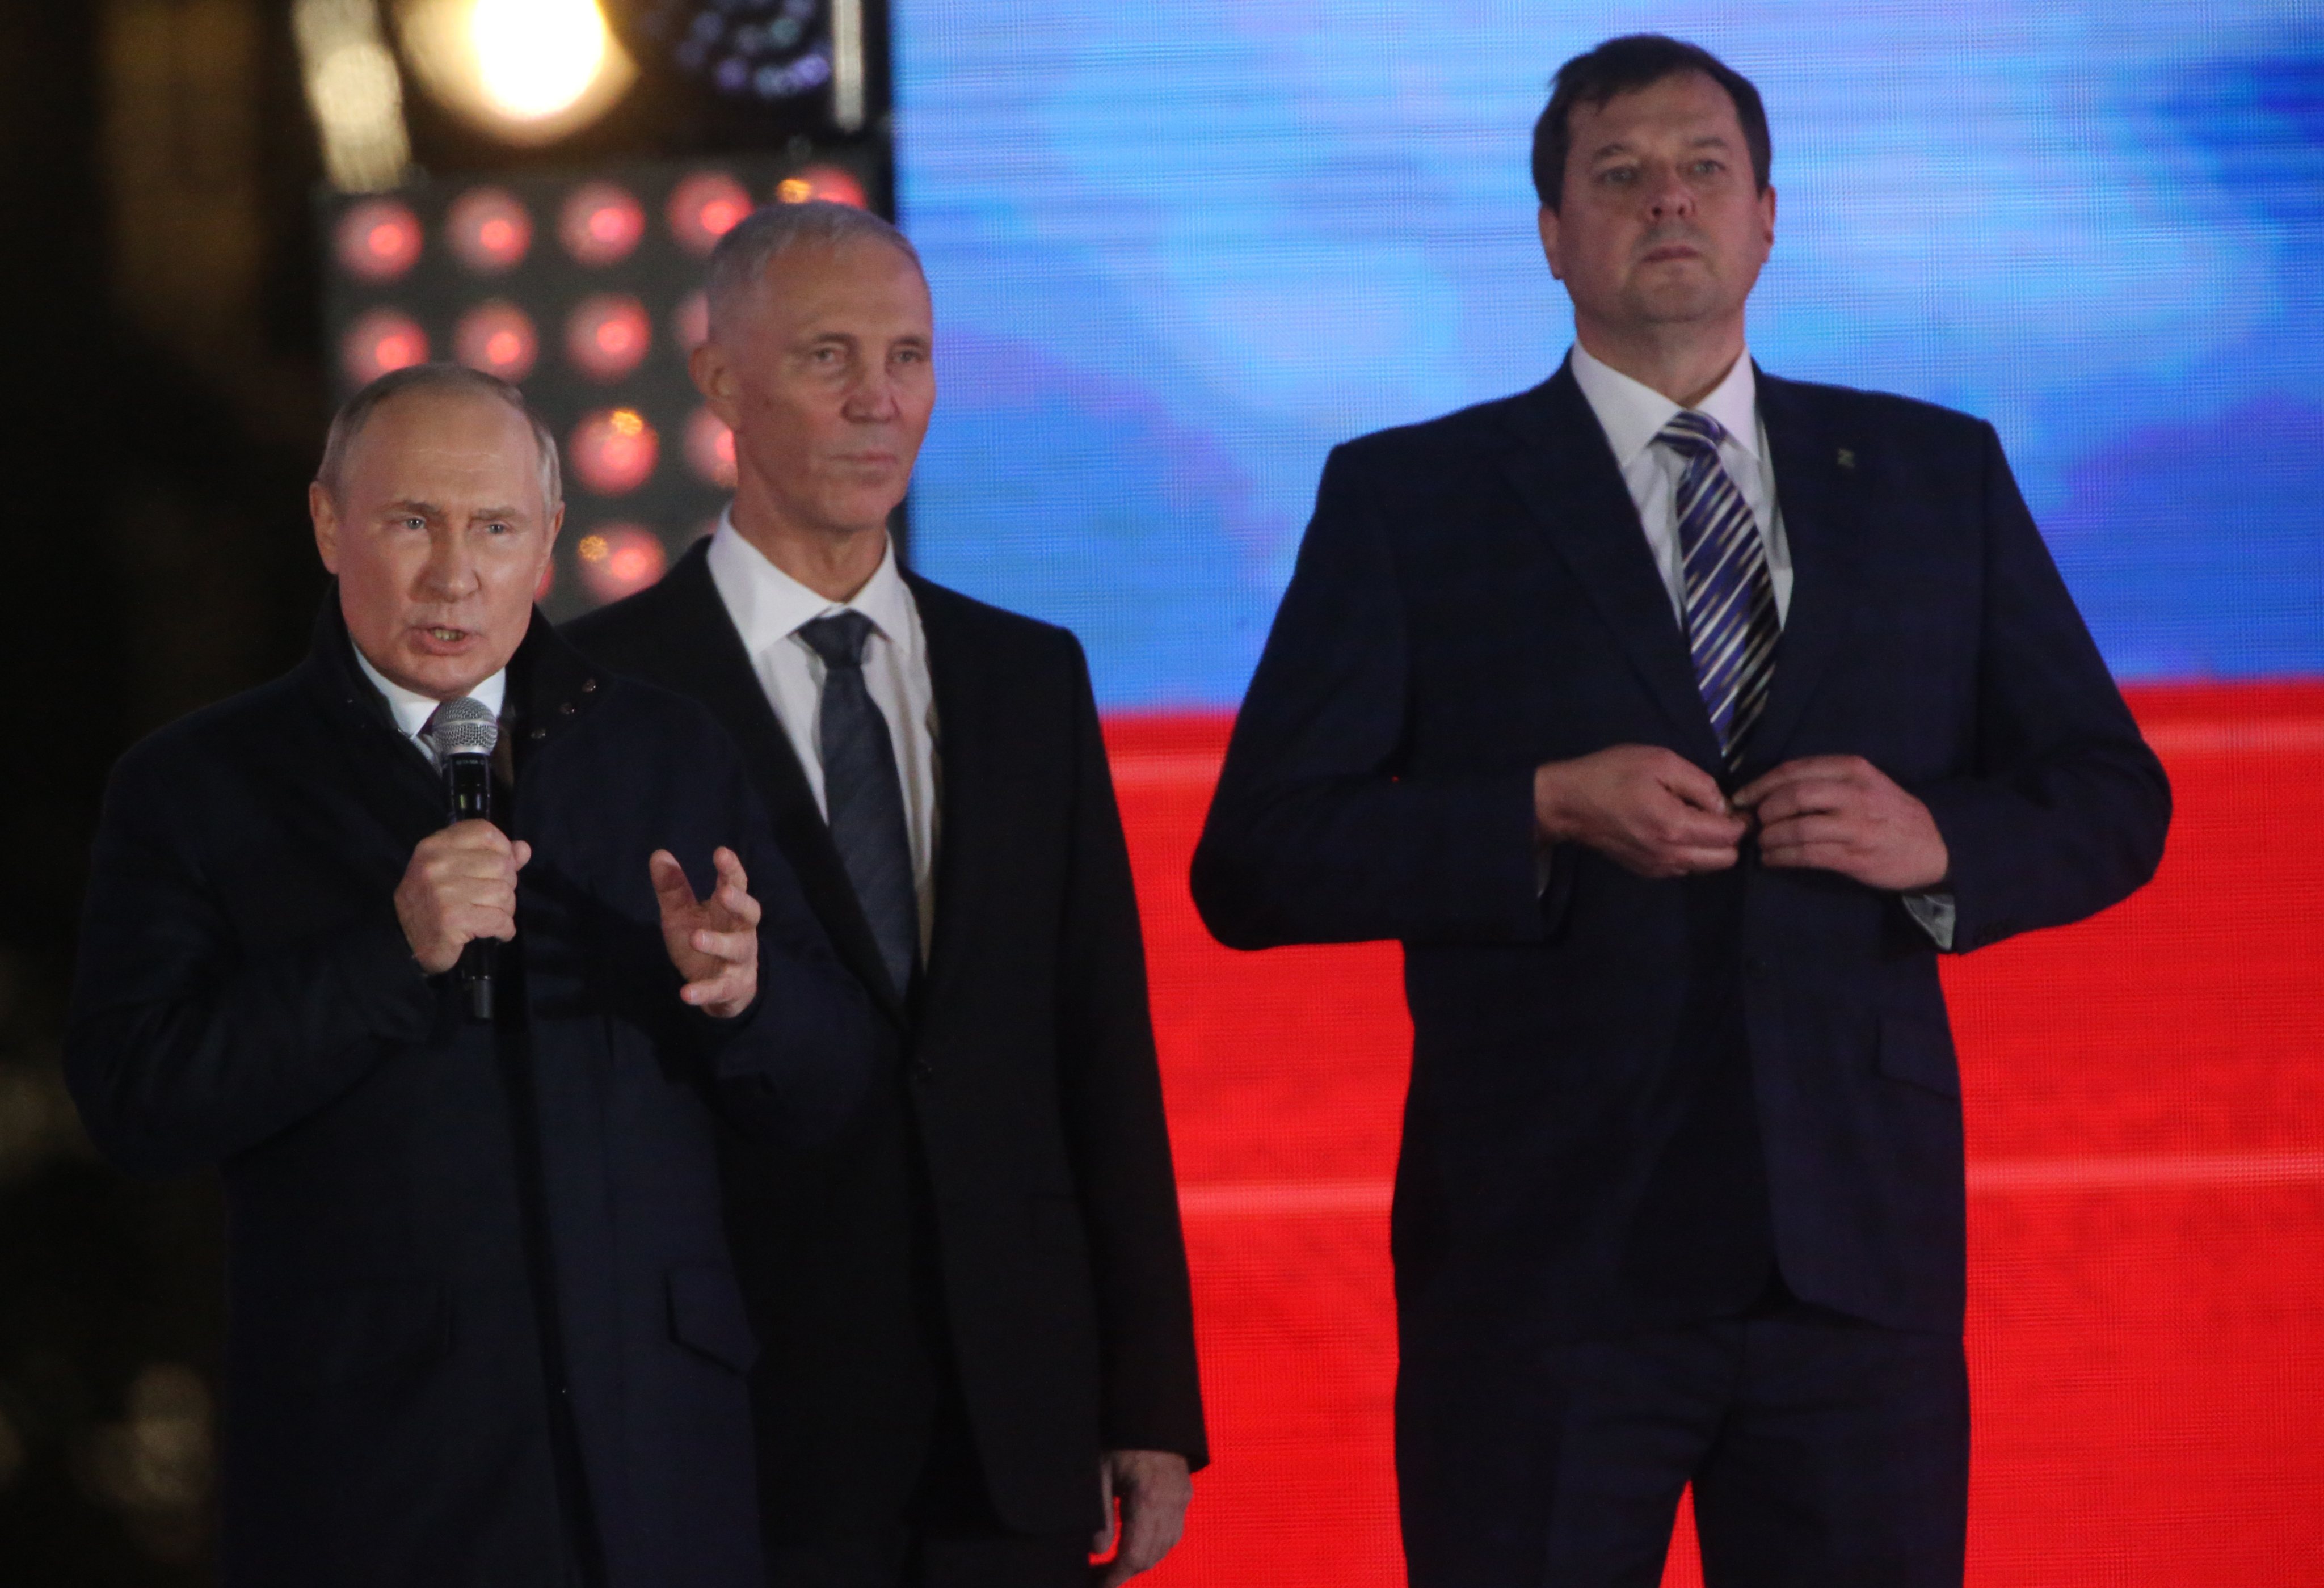 Russian President Vladimir Putin Hosts Ceremony With Separatist Leaders Of Ukrainian Regions After Referendum